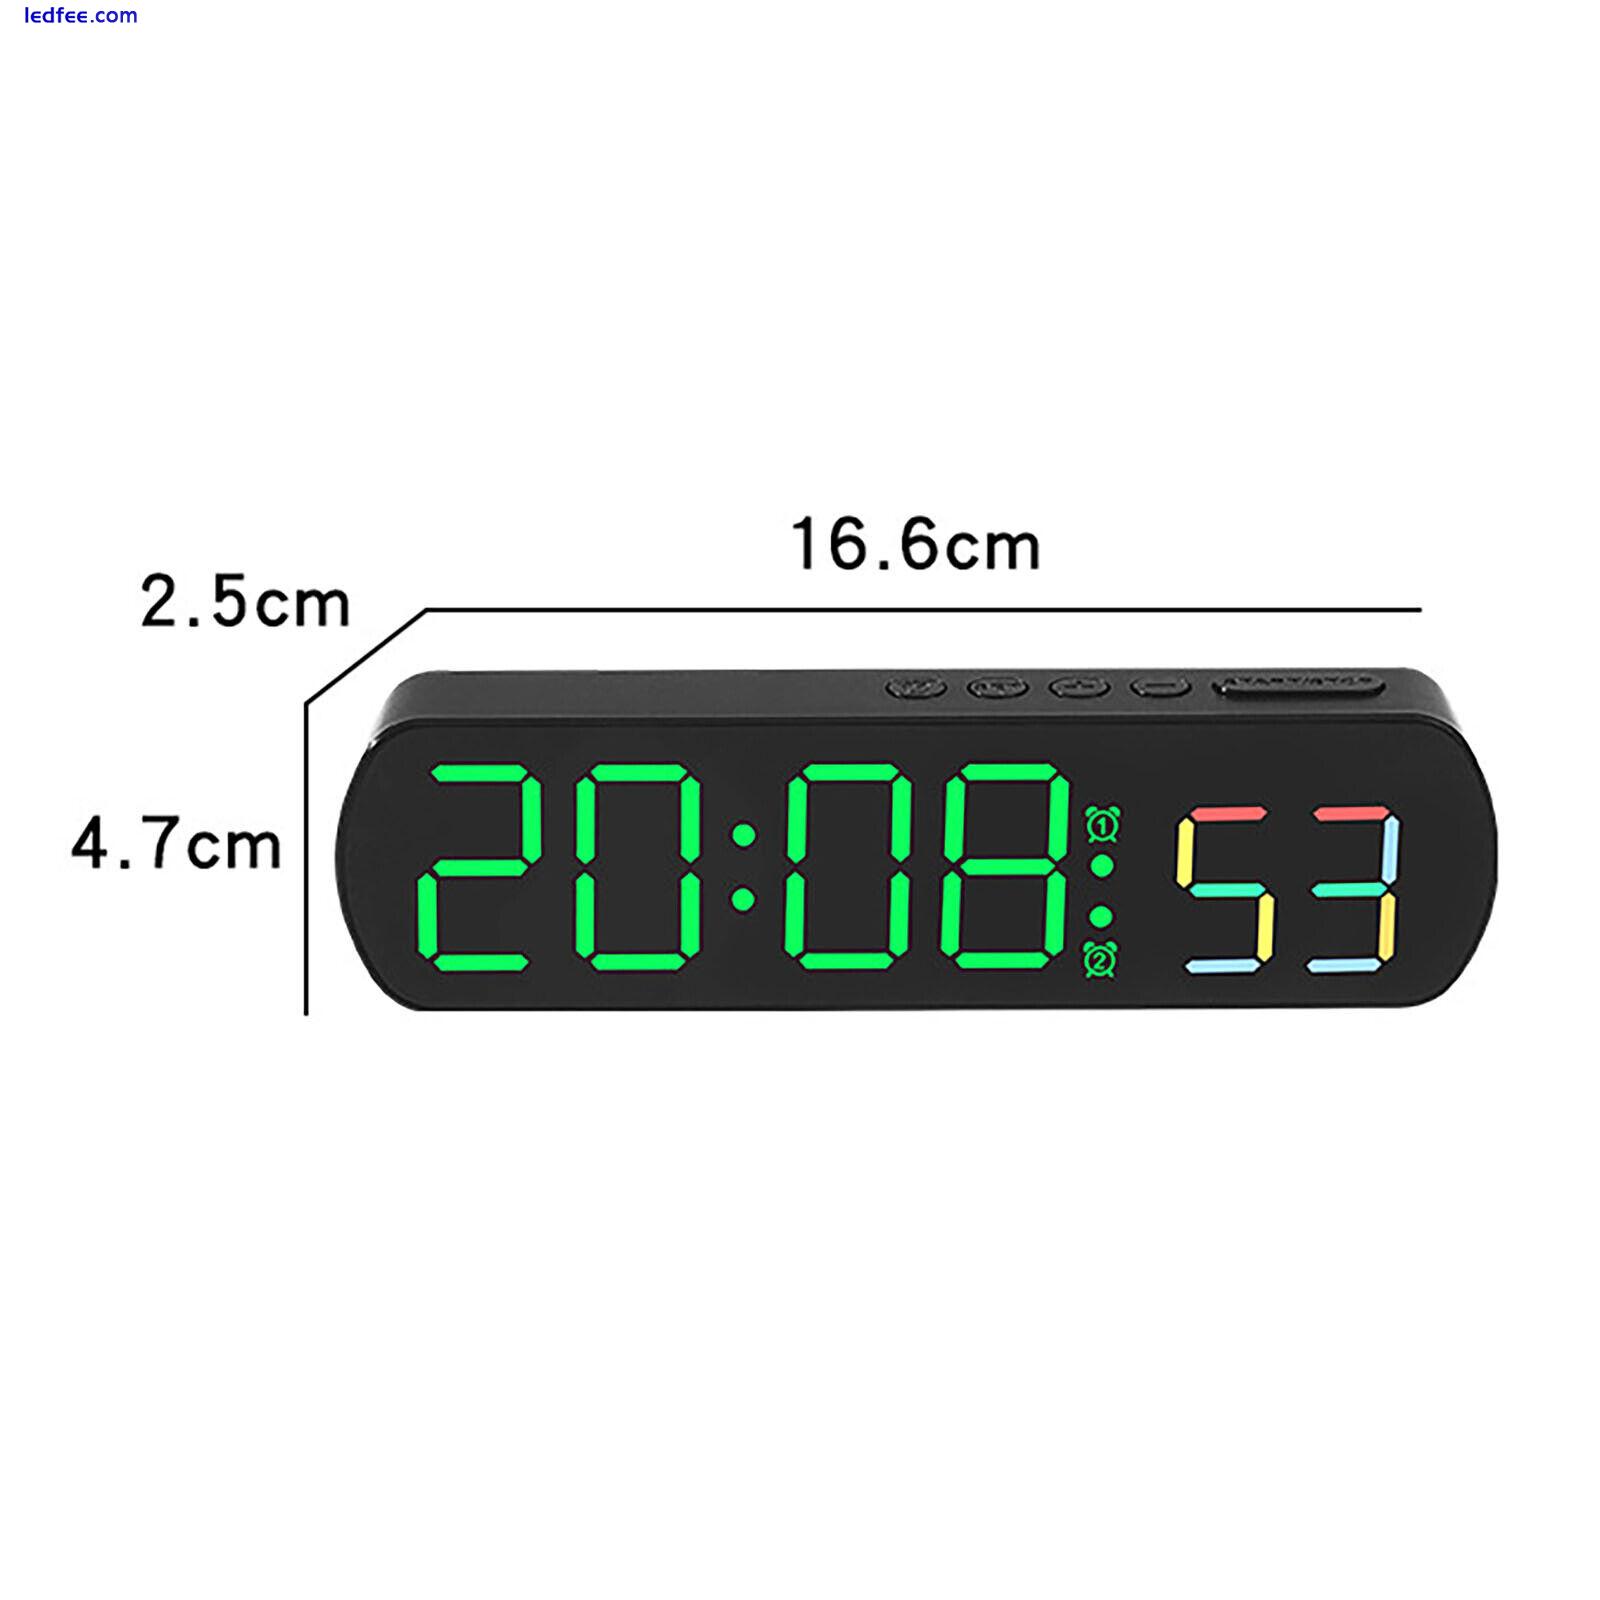 LED Electric Digital Alarm Clock with Temperature Date Display Bedside Clocks 2 